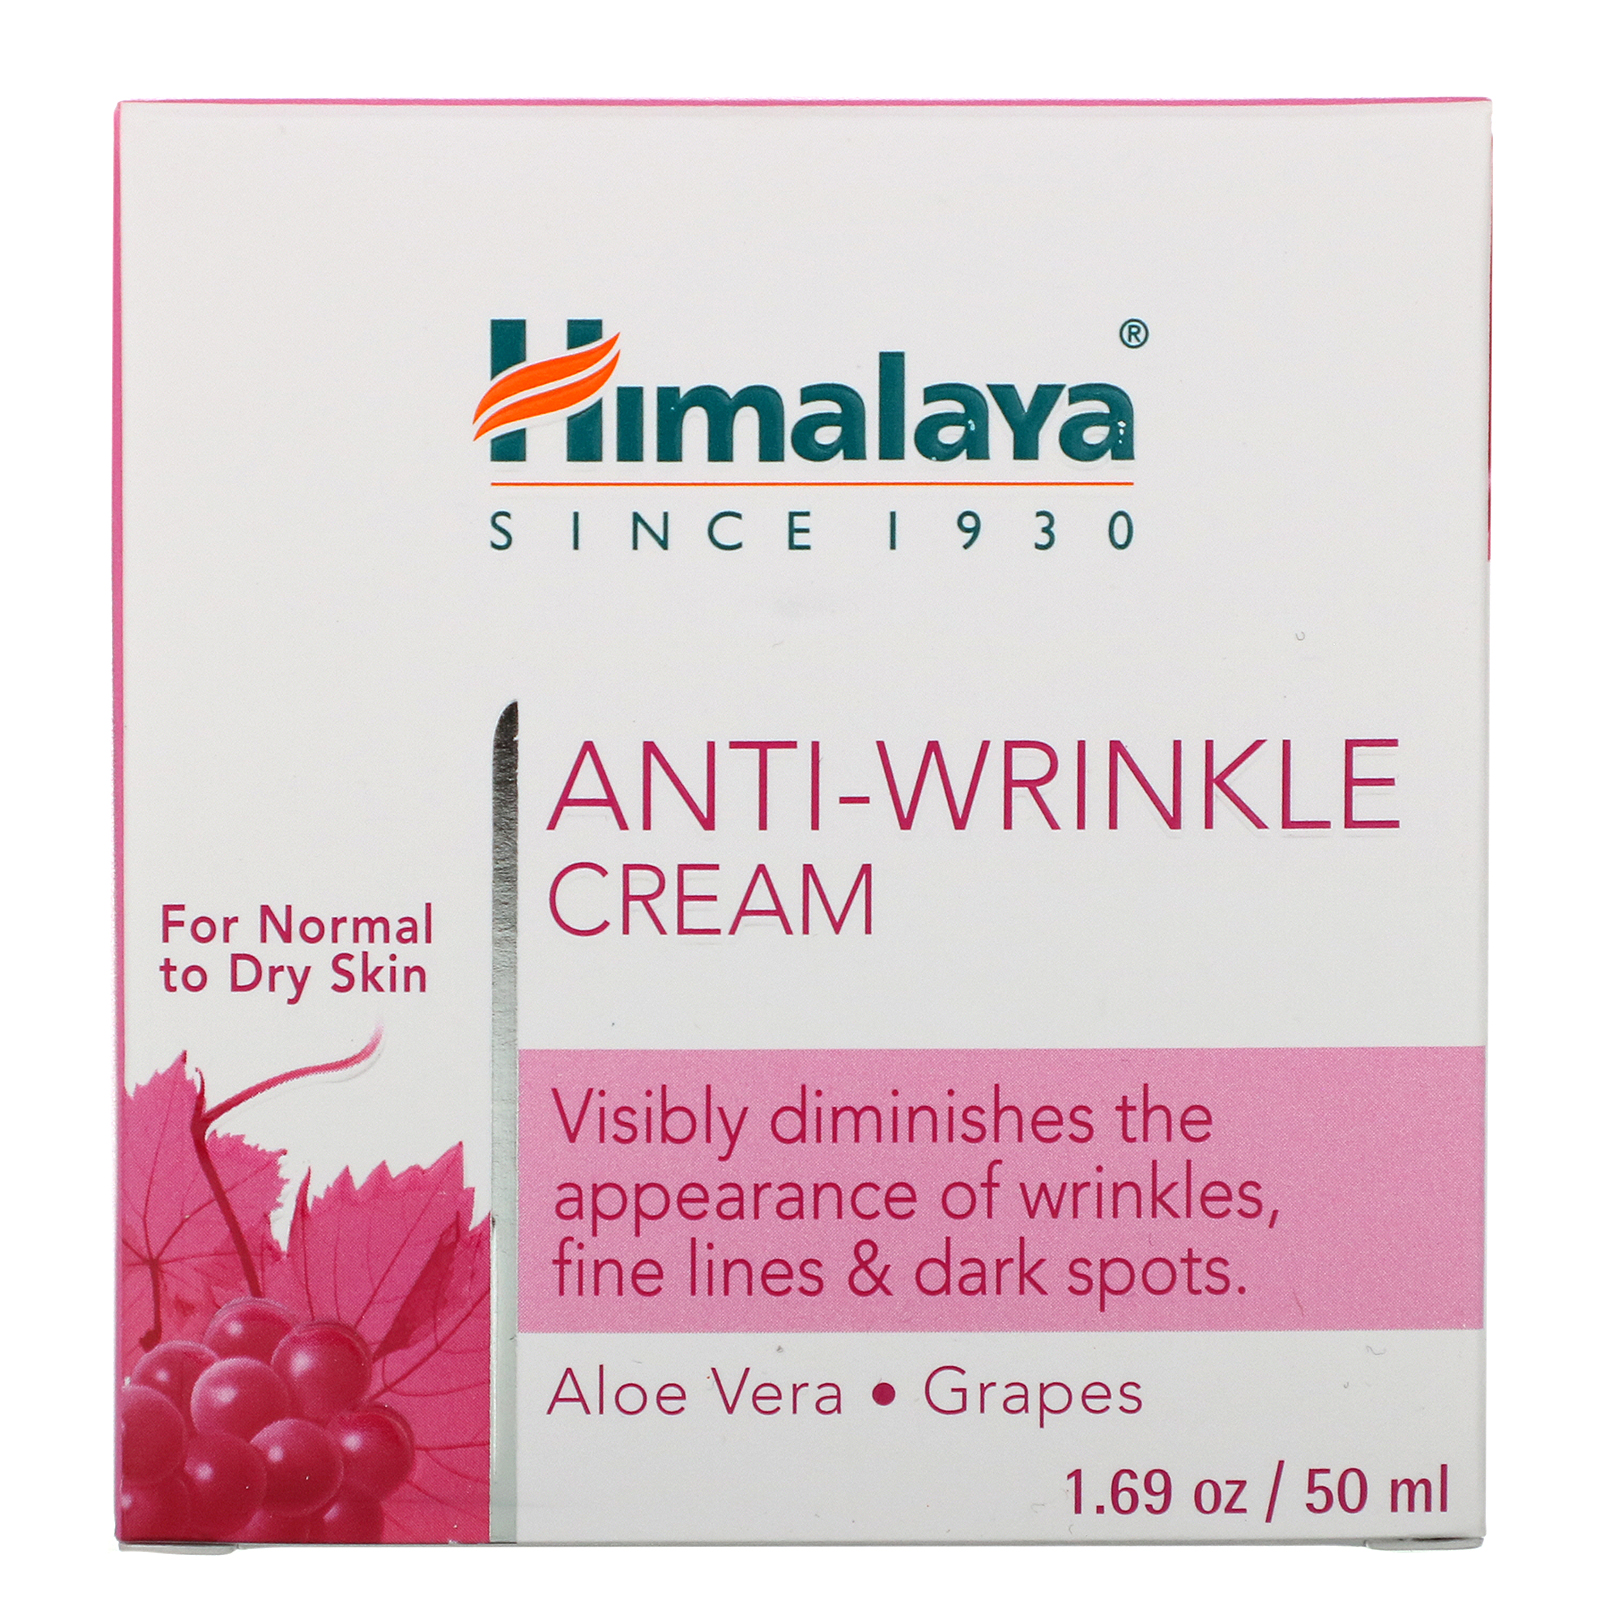 himalaya anti wrinkle cream ingredients